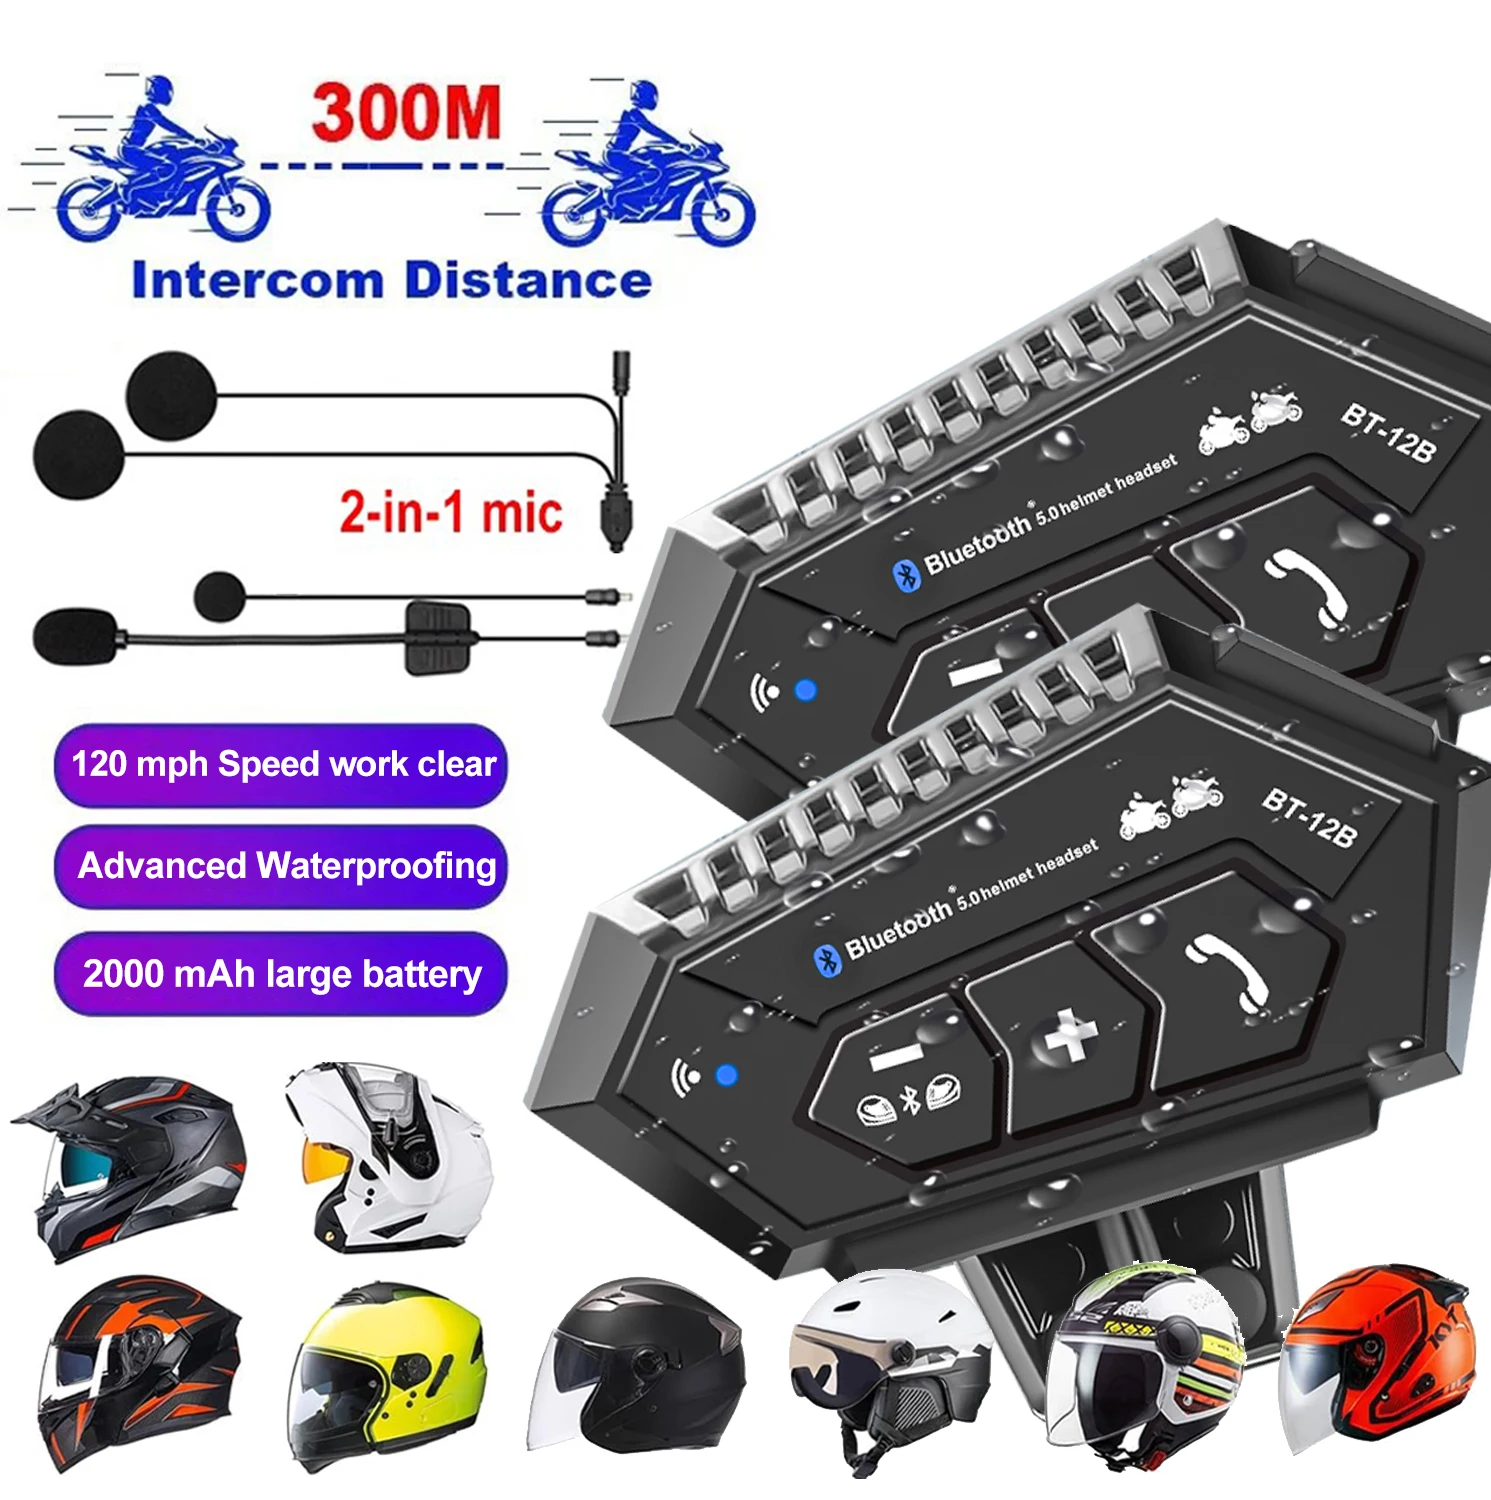 

BT12B Motorcycle Helmet Headset Motorcycle Intercom 2 Rider Talk At The Same Time Waterproof Interphone Full Duplex With DSP CVC